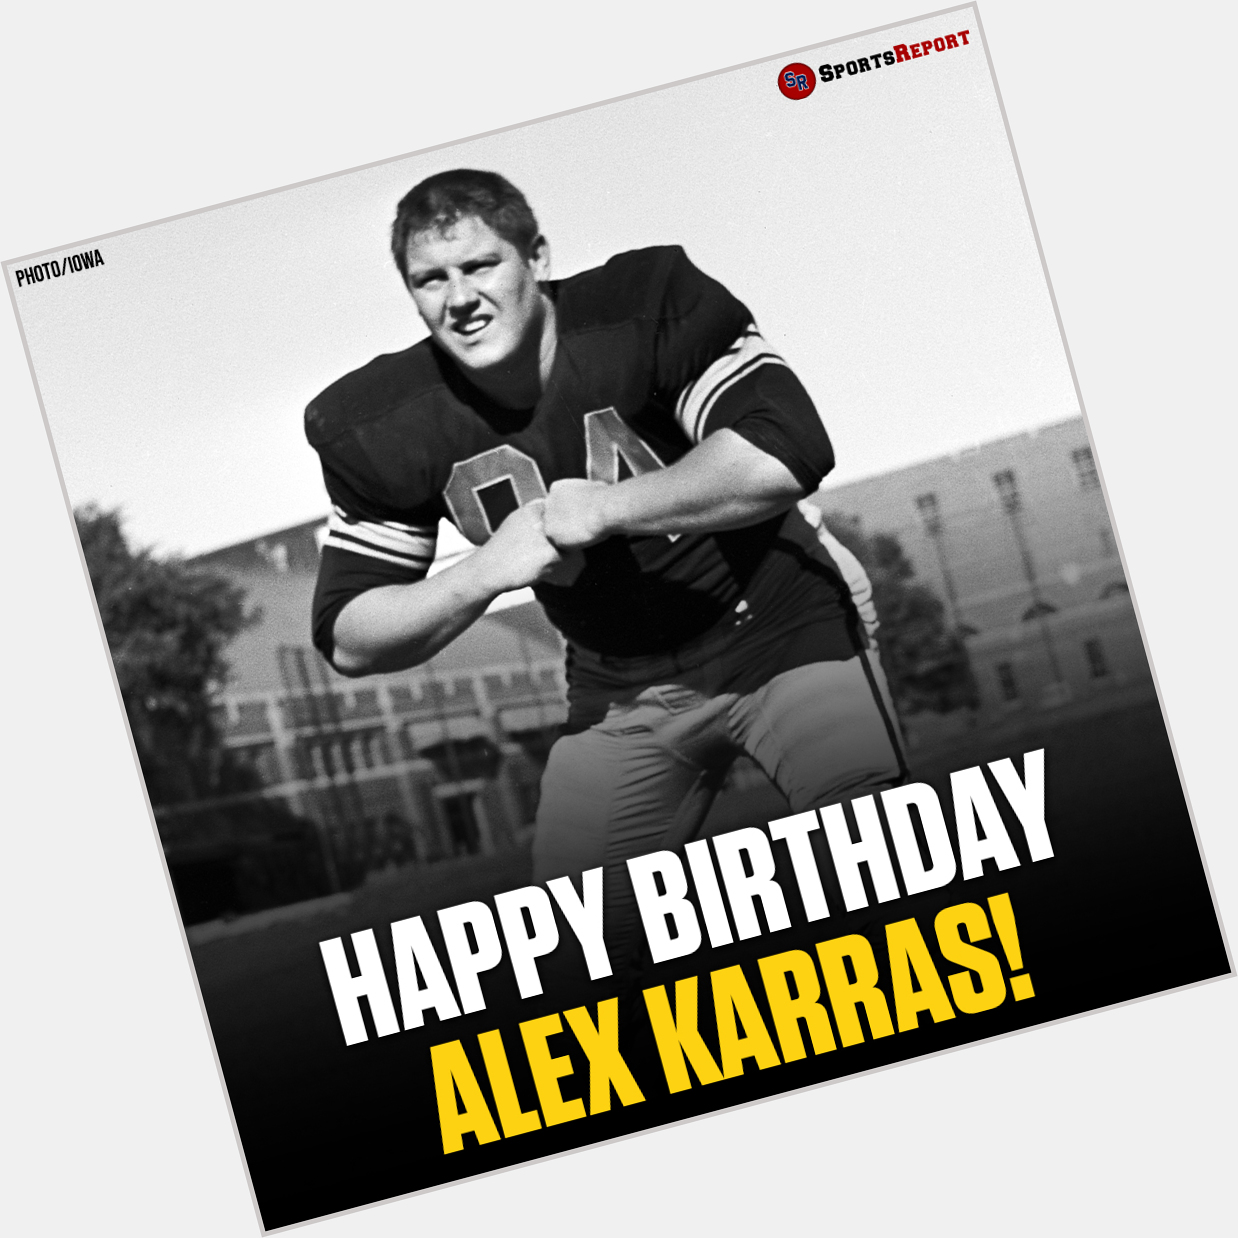 Happy Birthday (forever) to Legend, Alex Karras! 